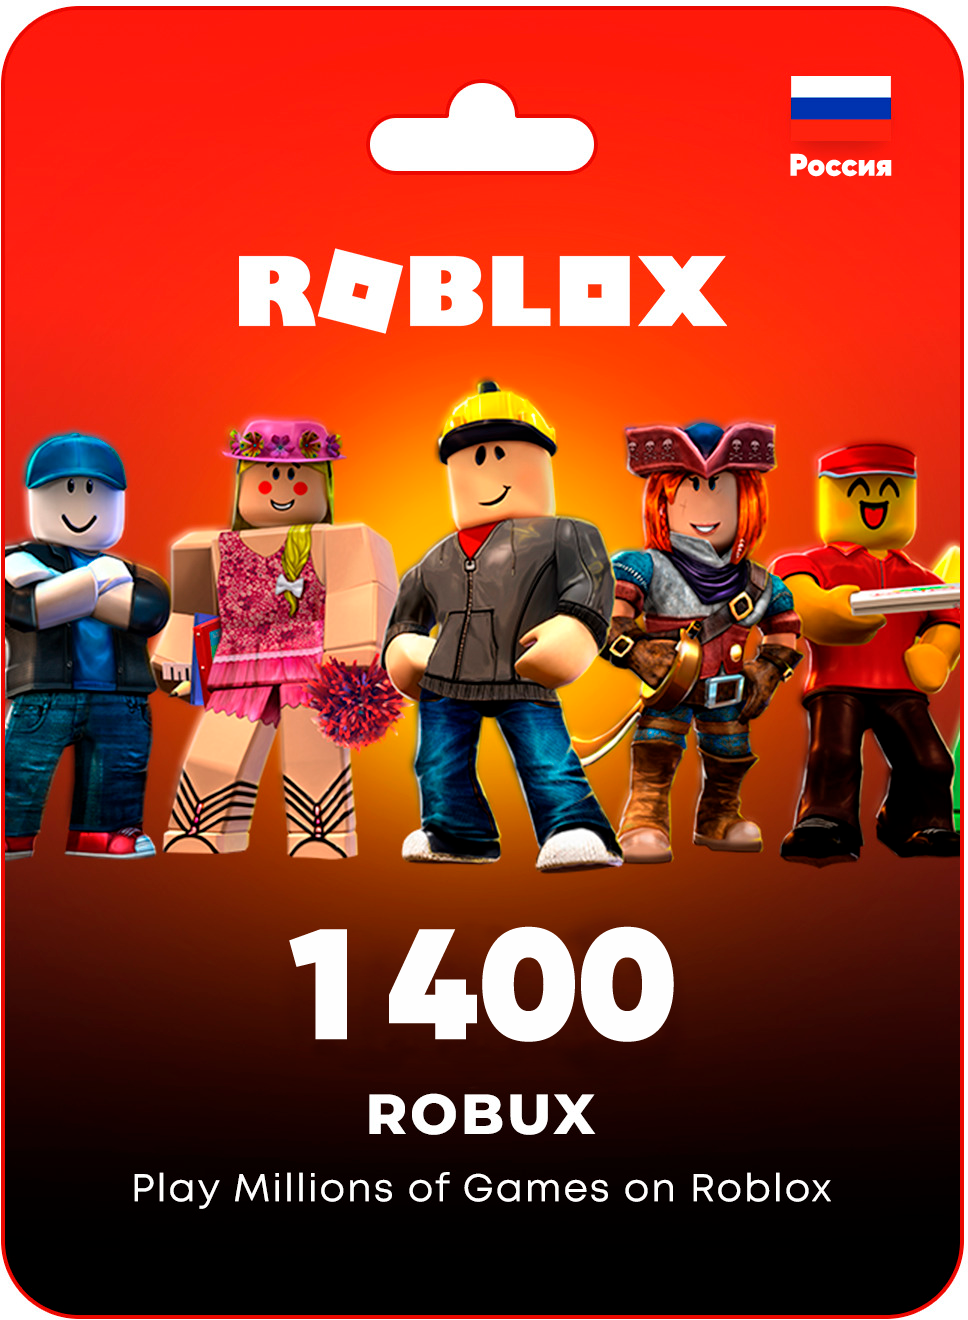 Пополнение счета Roblox на 1400 Robux / Код активации Робуксы / Подарочная карта Роблокс / Gift Card (Россия)